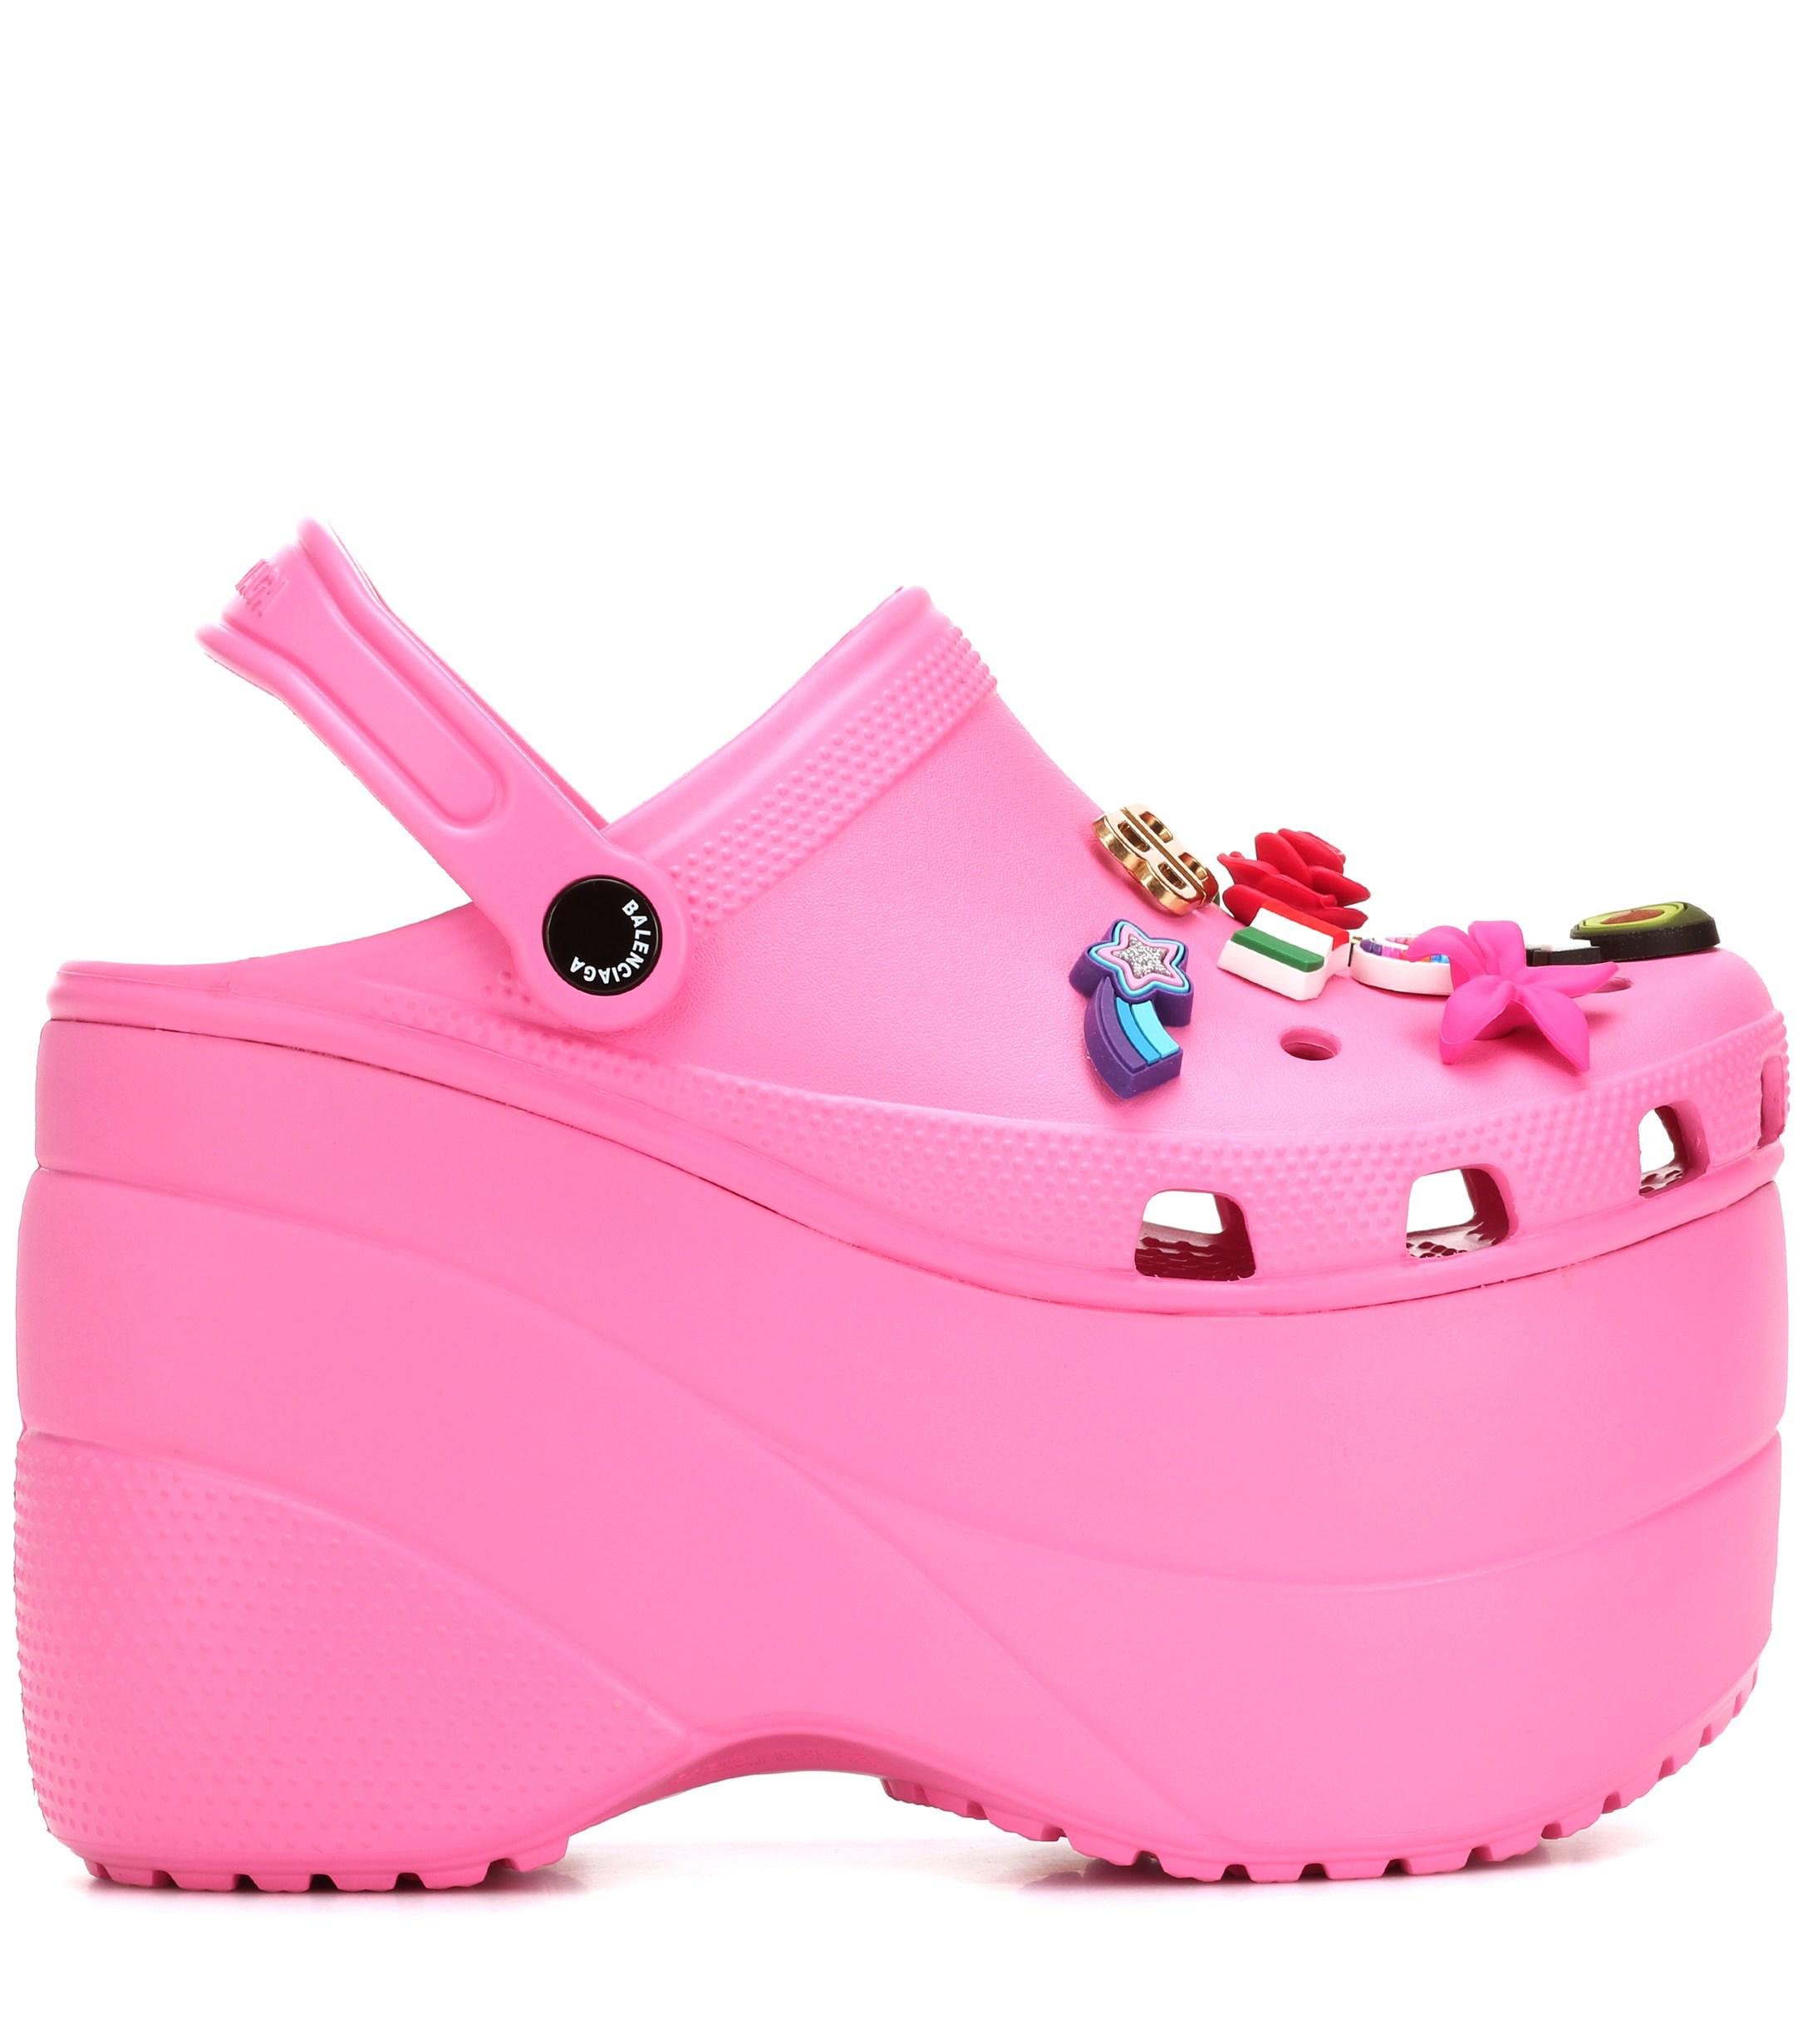 Lyst - Balenciaga Platform Crocs in Pink